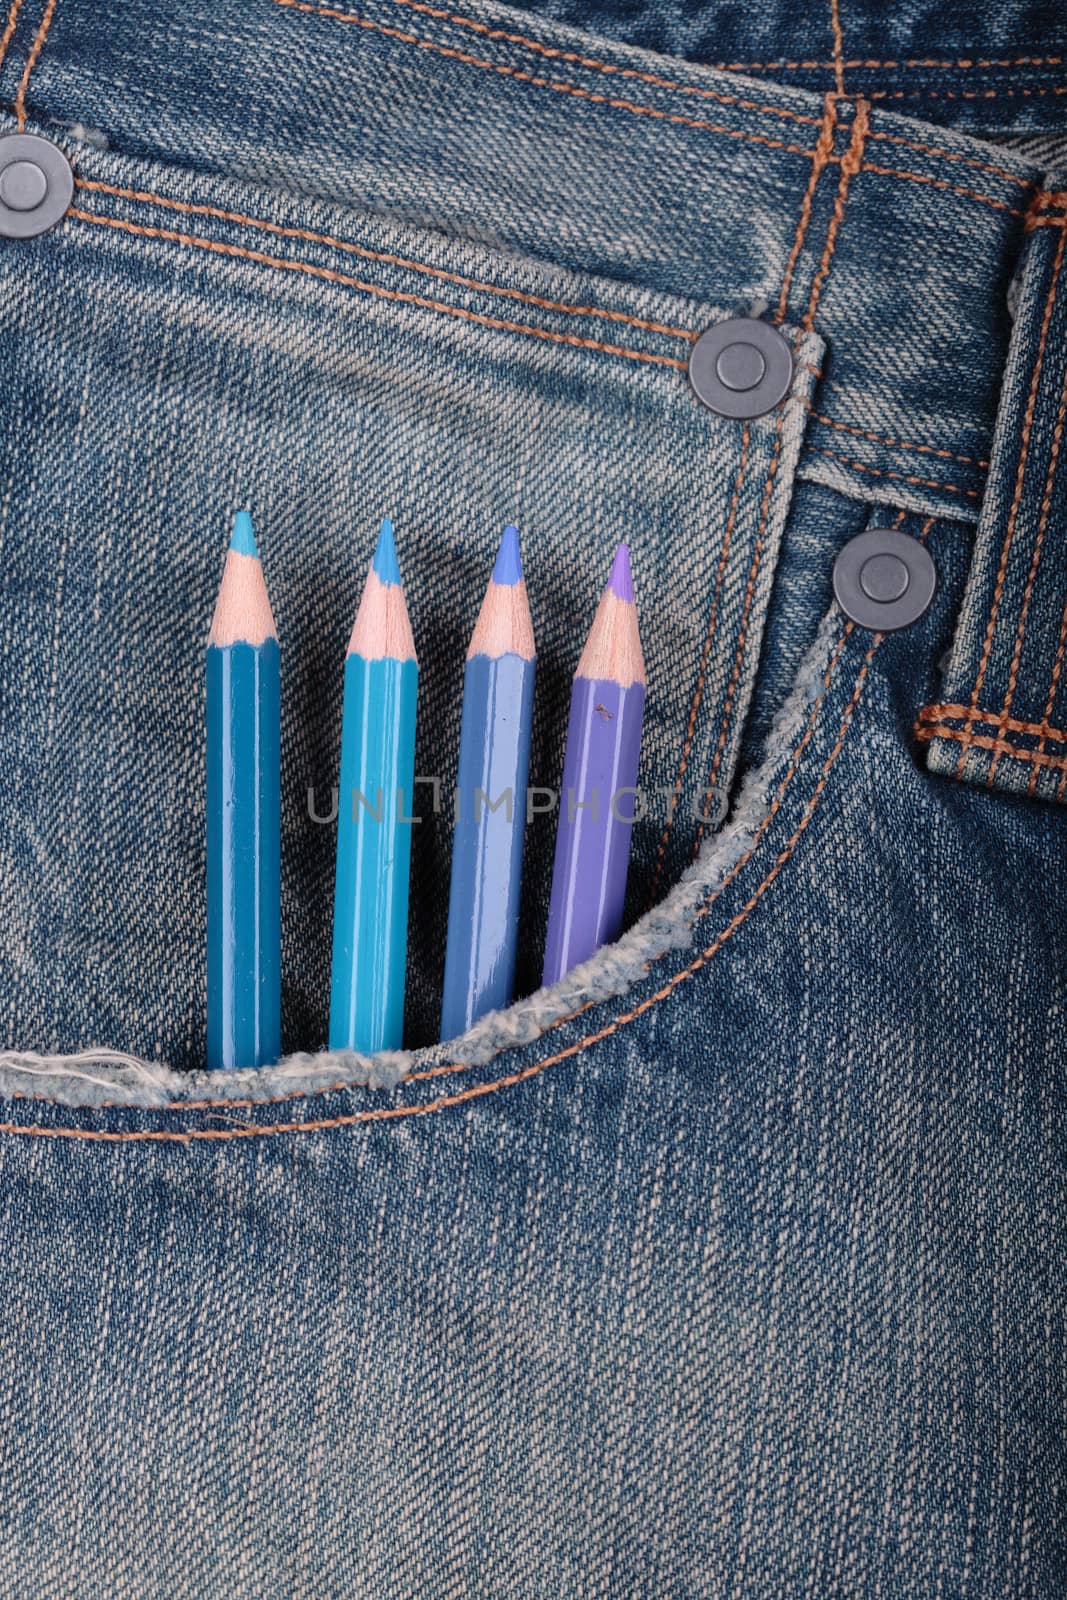 four blue pencils on a jeans pocket